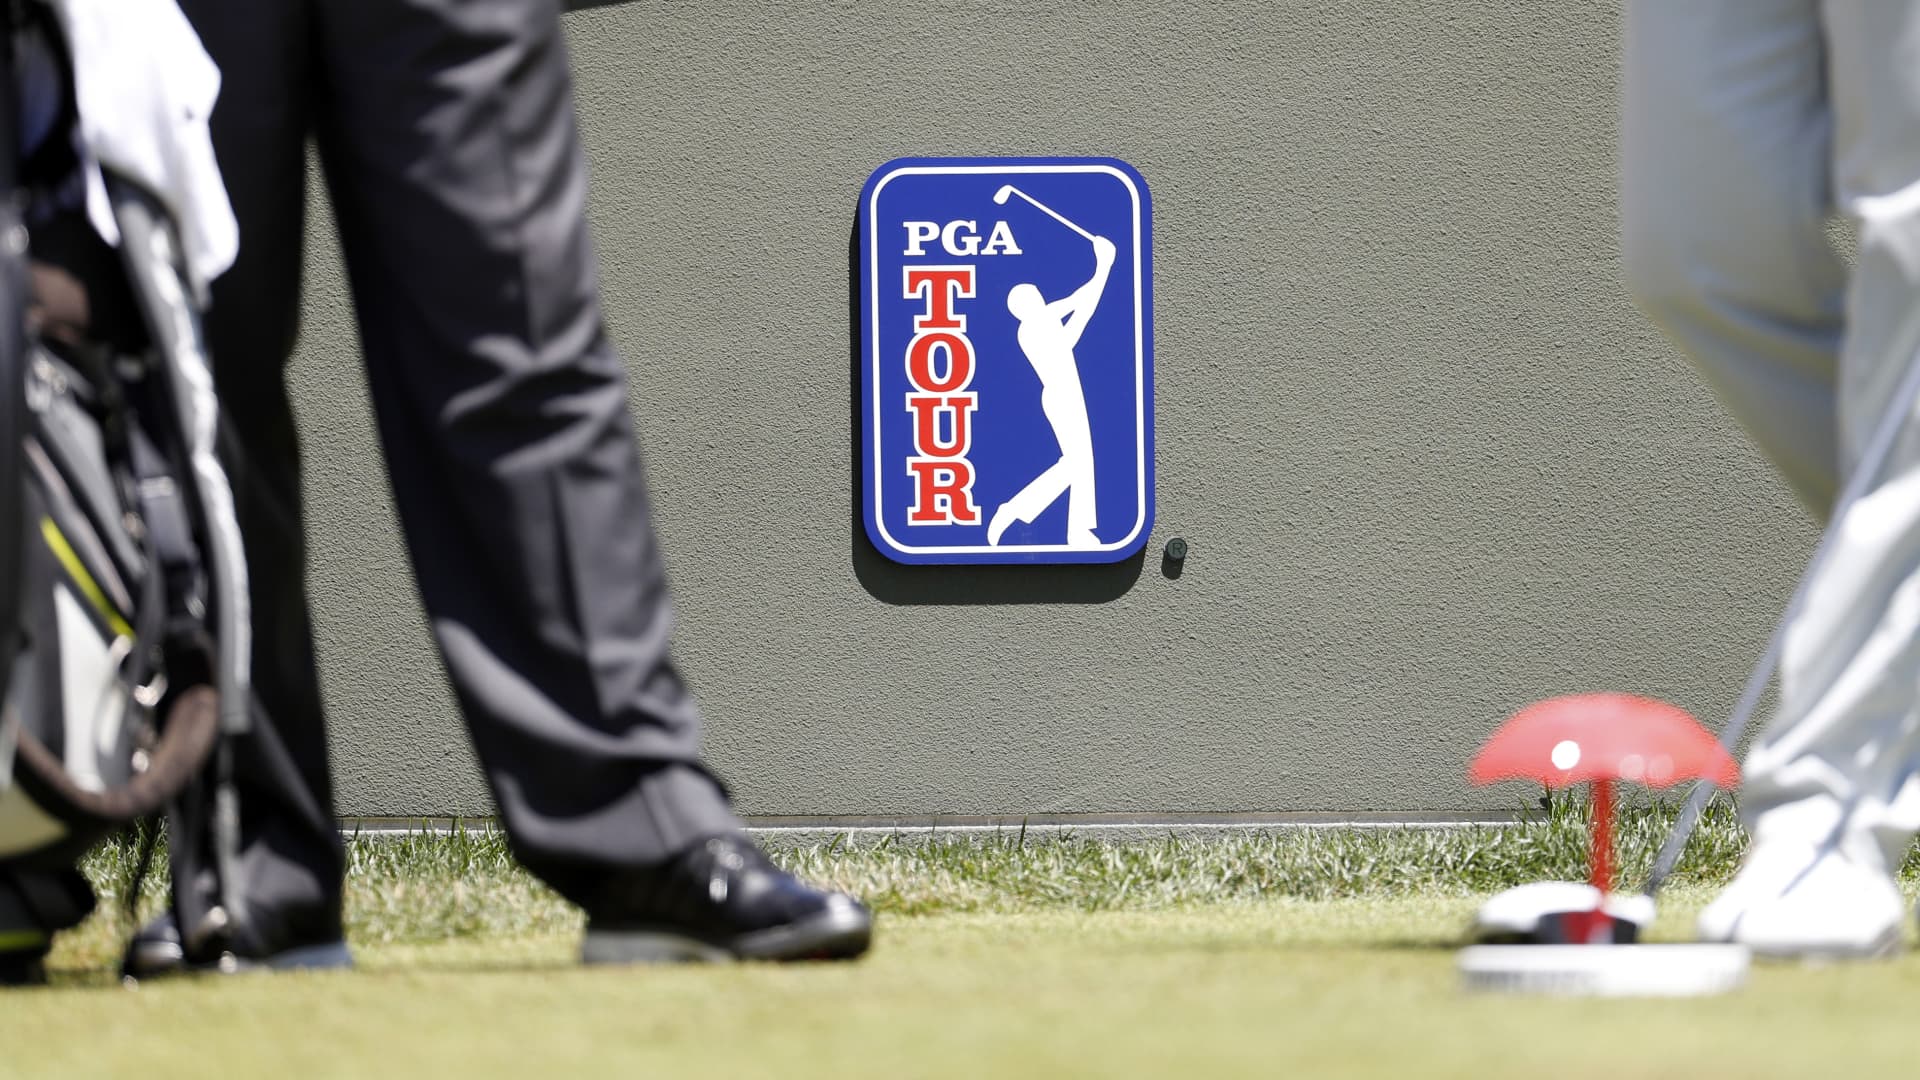 PGA Tour, LIV Golf merger probed by Sen. Richard Blumenthal